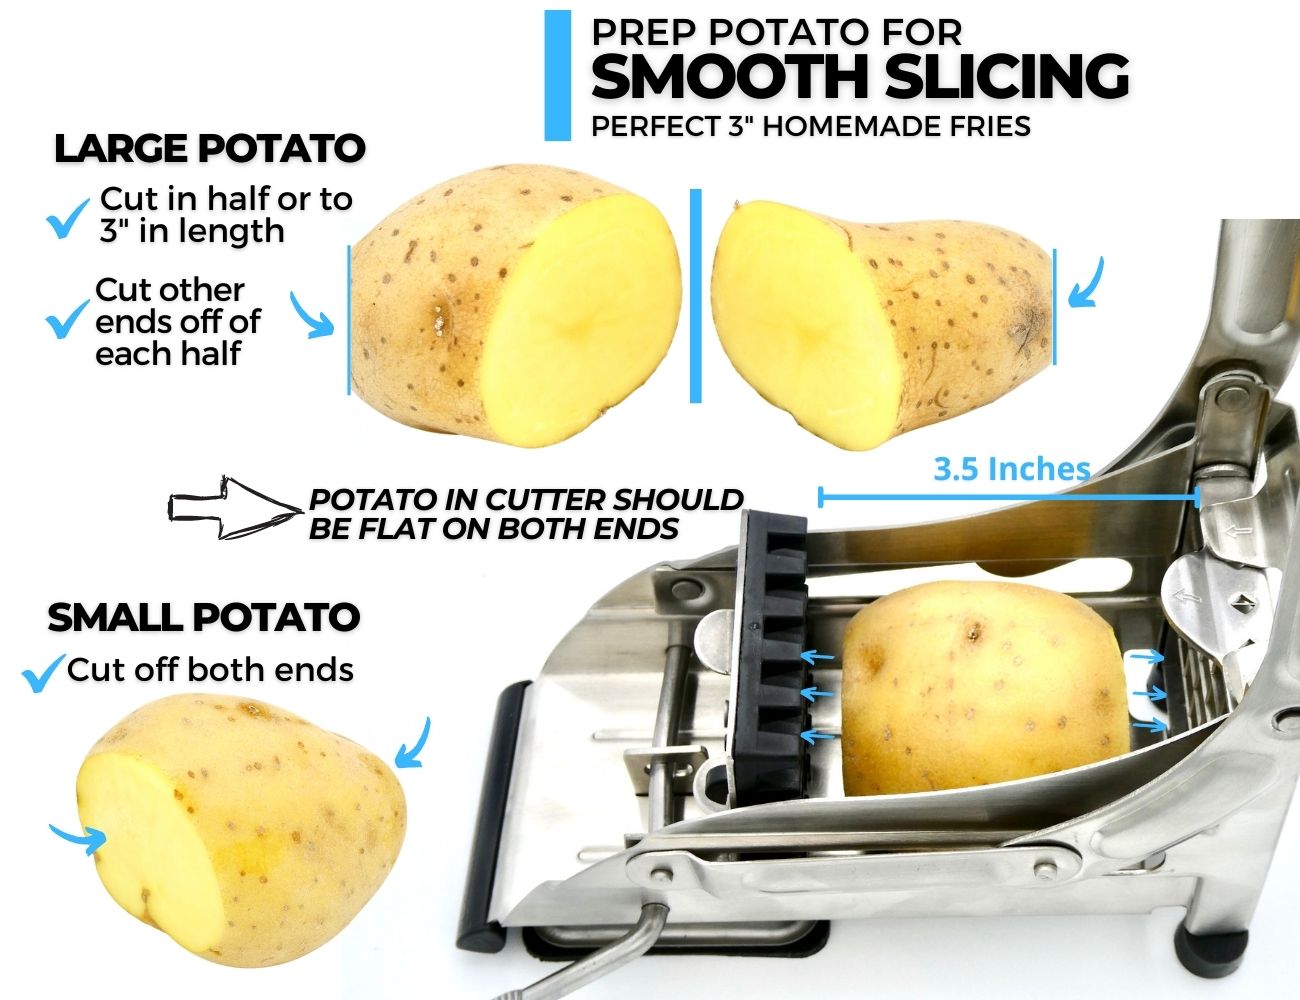 Stainless Steel King Crockery Potato Chipper & Cutter